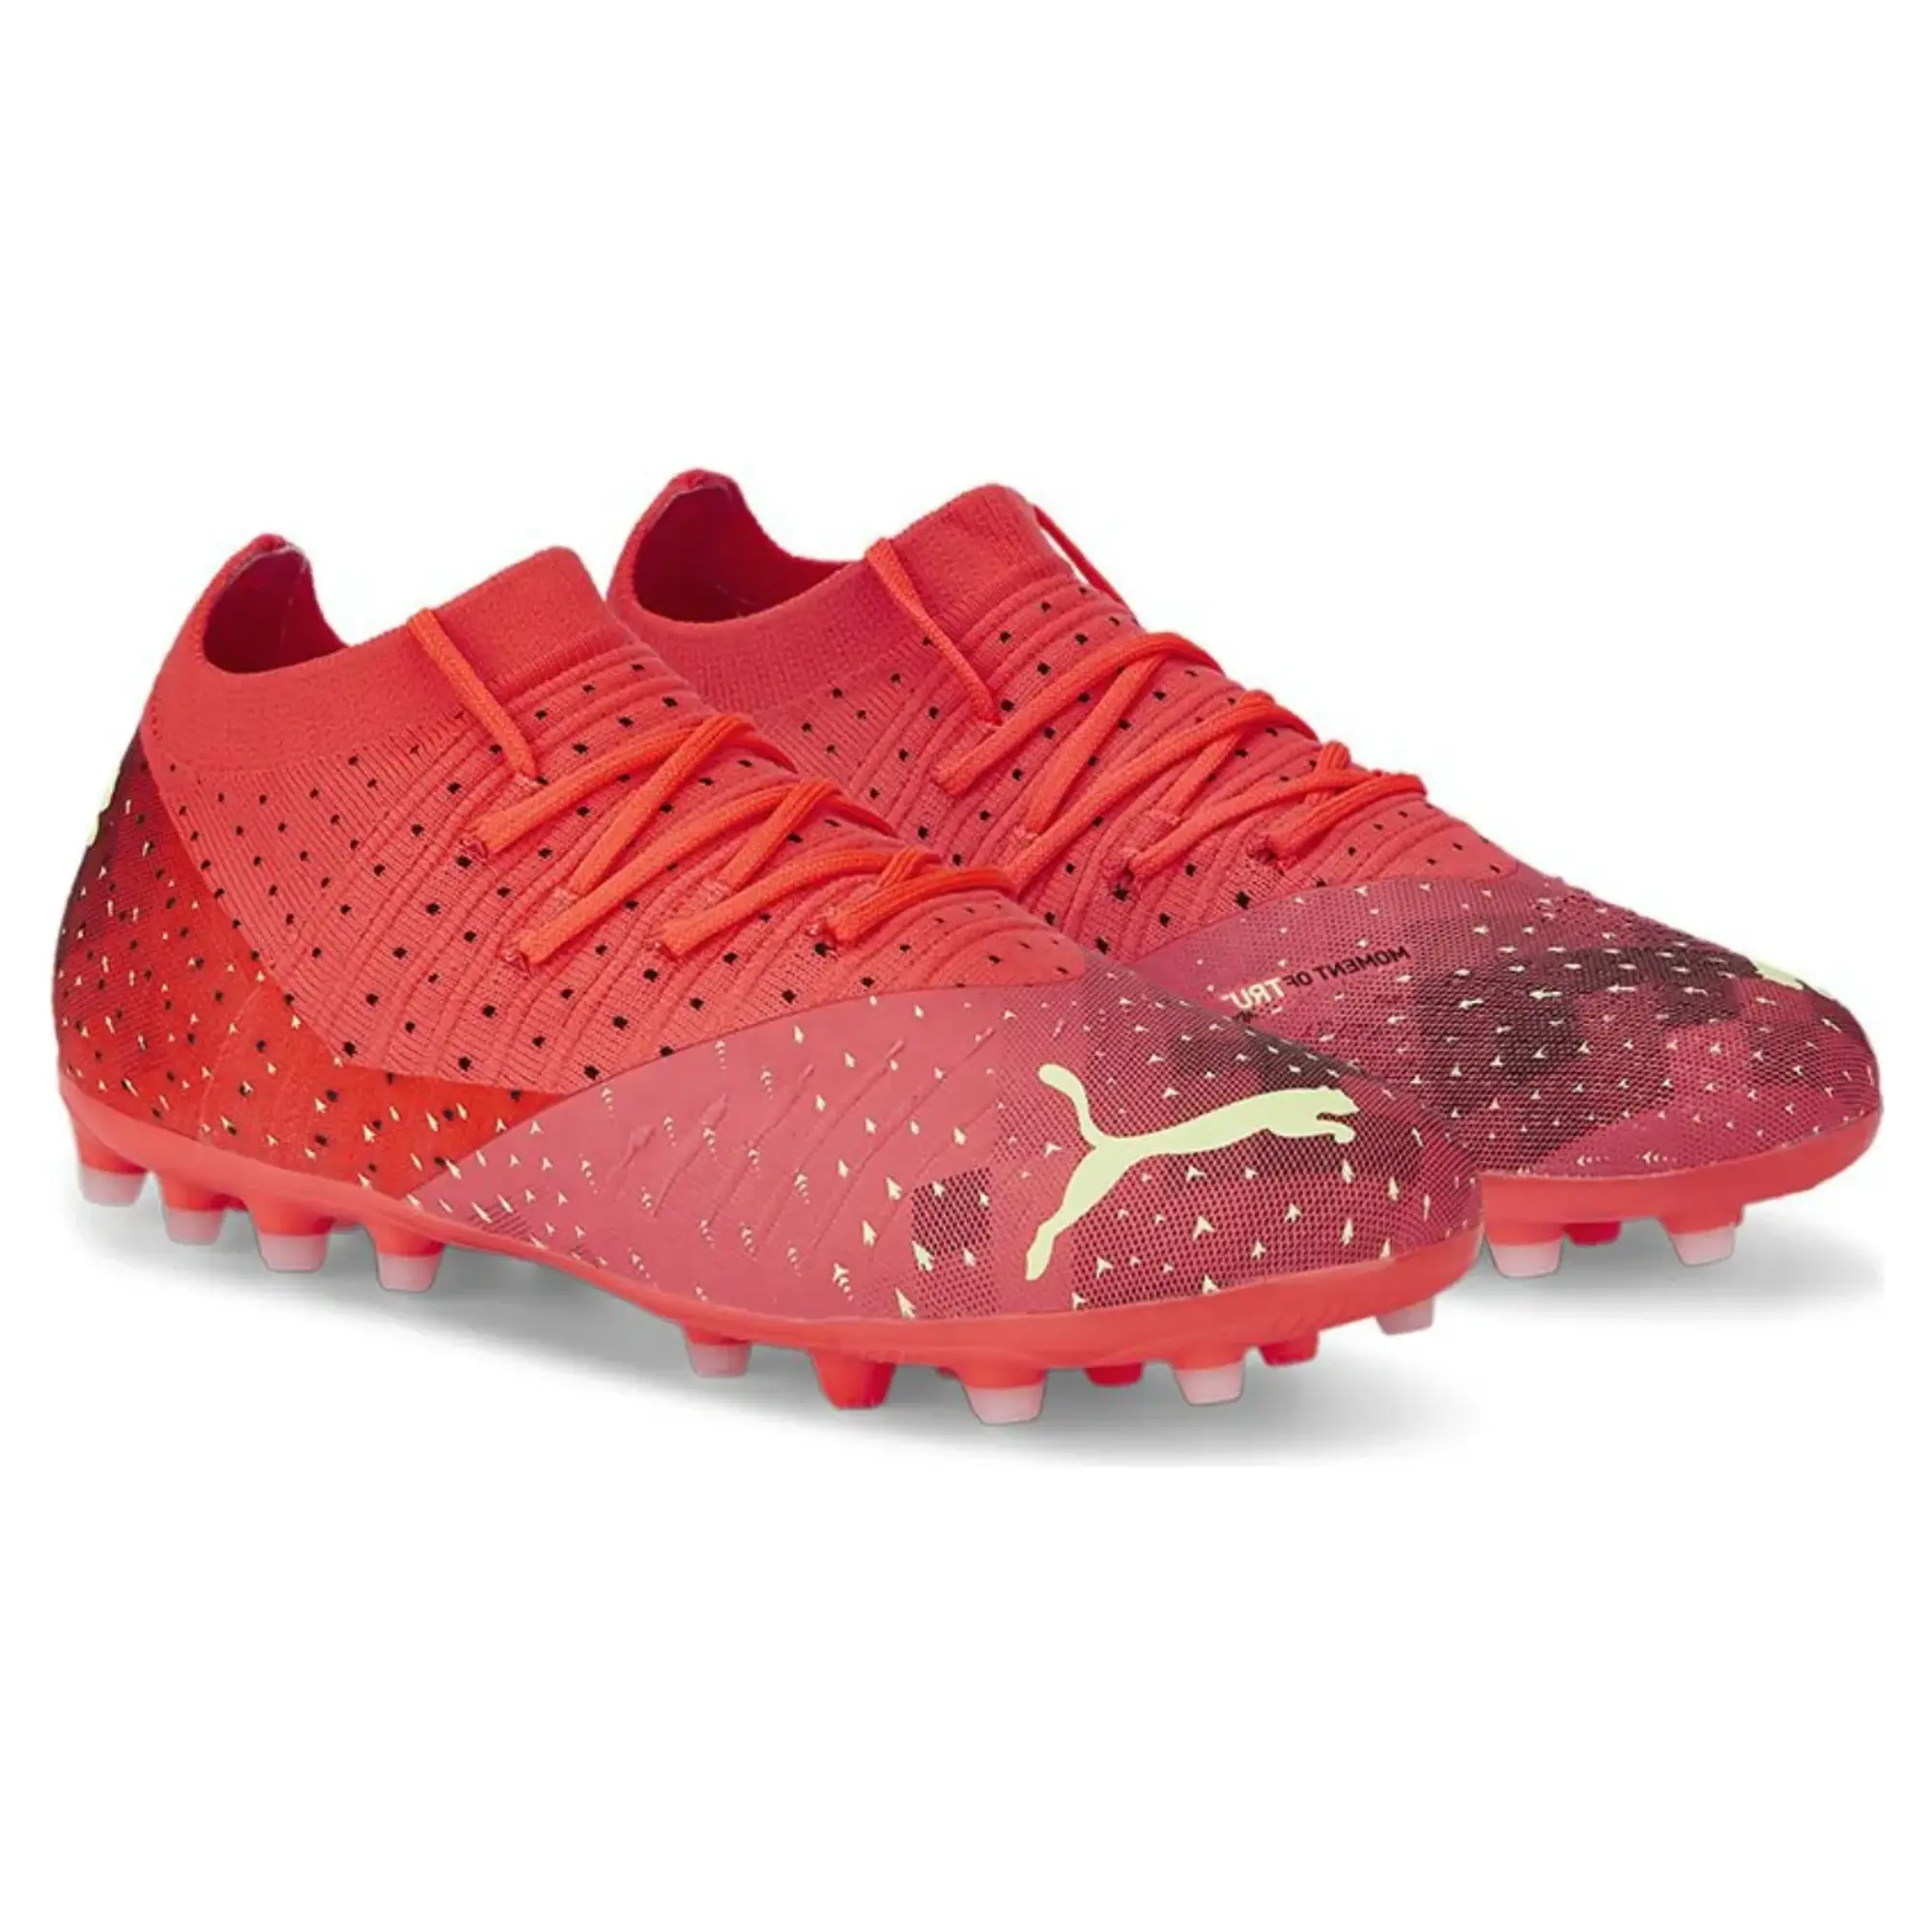 Puma Future Z 3.4 Mg Football Boots  - Red